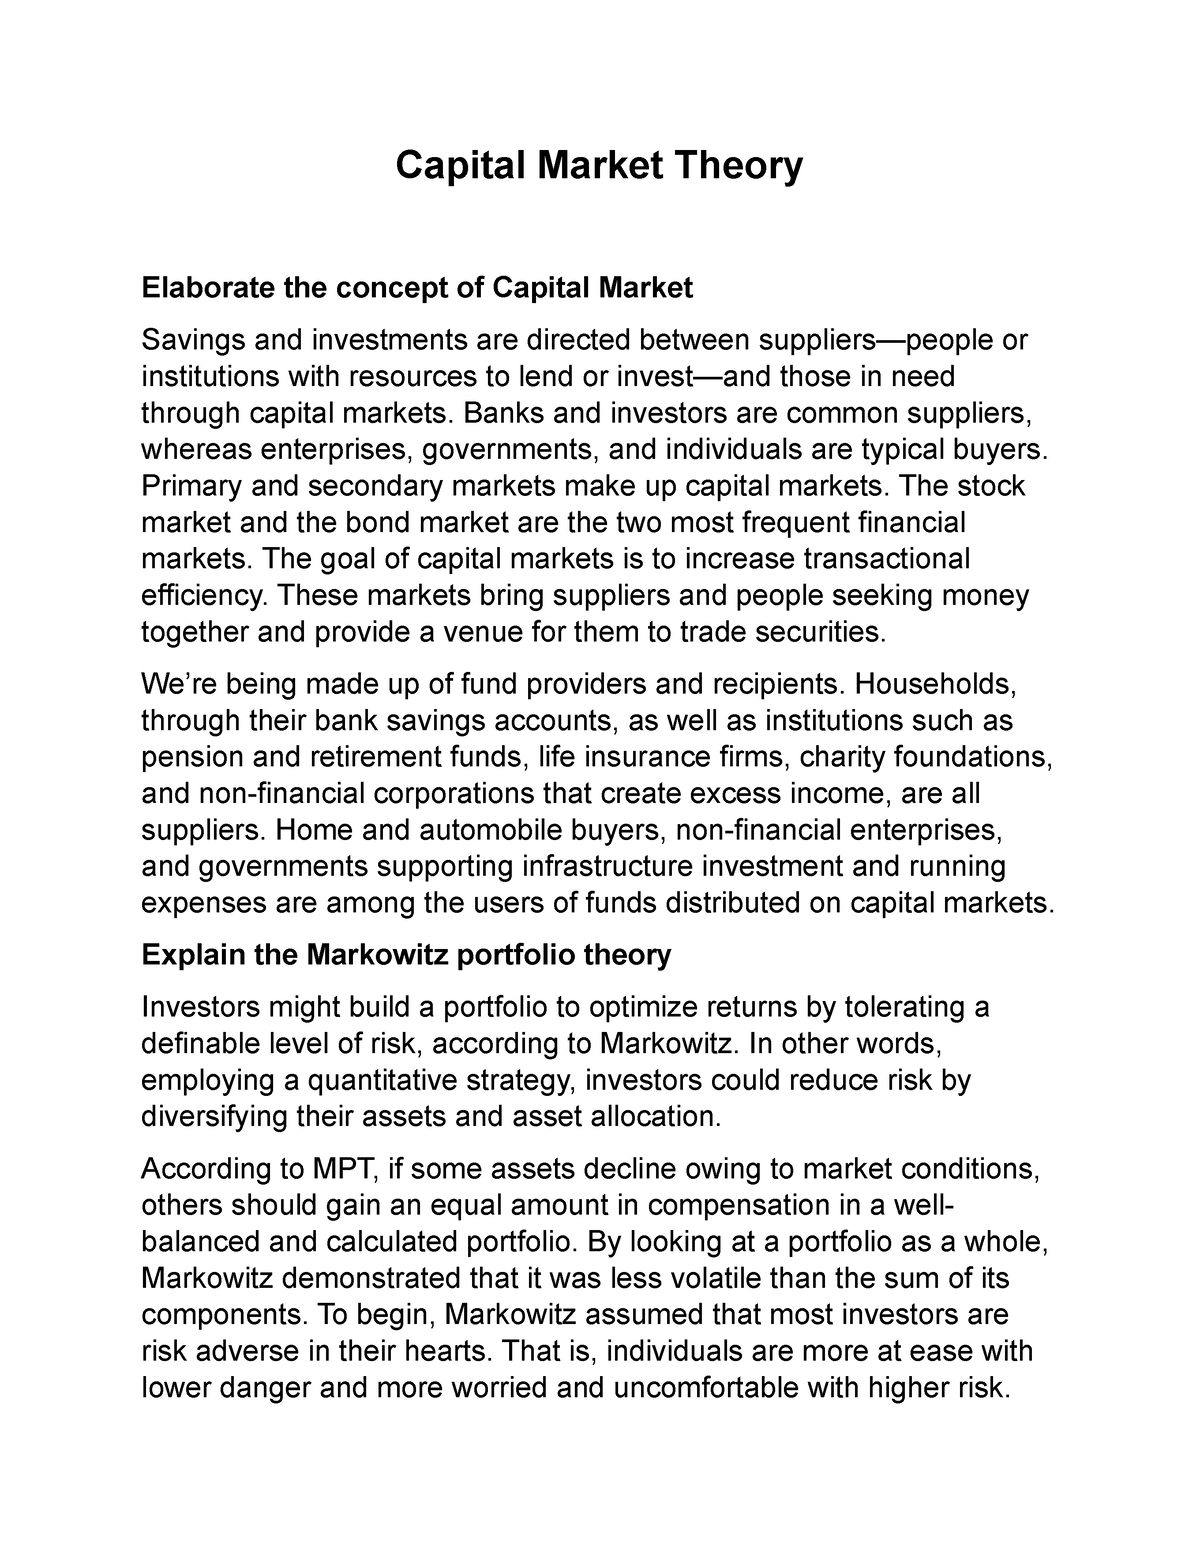 dissertation topics on capital market